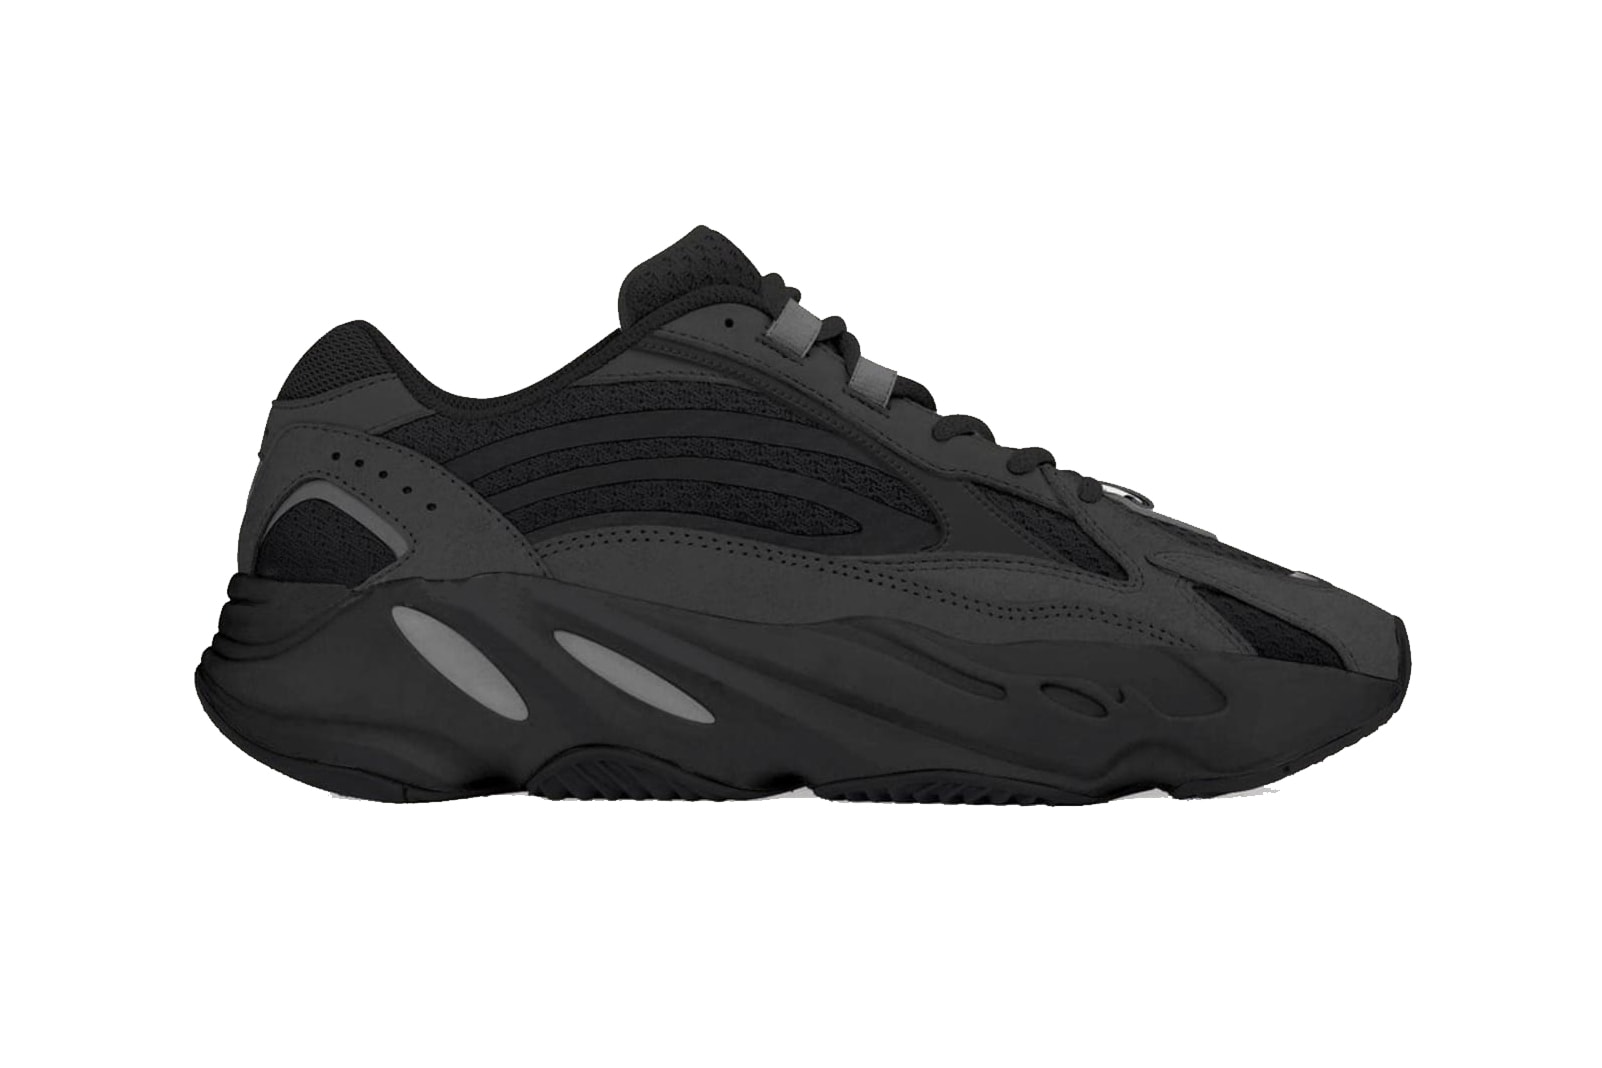 adidas Yeezy Boost 700 V2 Vanta Teaser kanye West Sneakers boost adidas kicks black trainers fashion streetwear footwear 